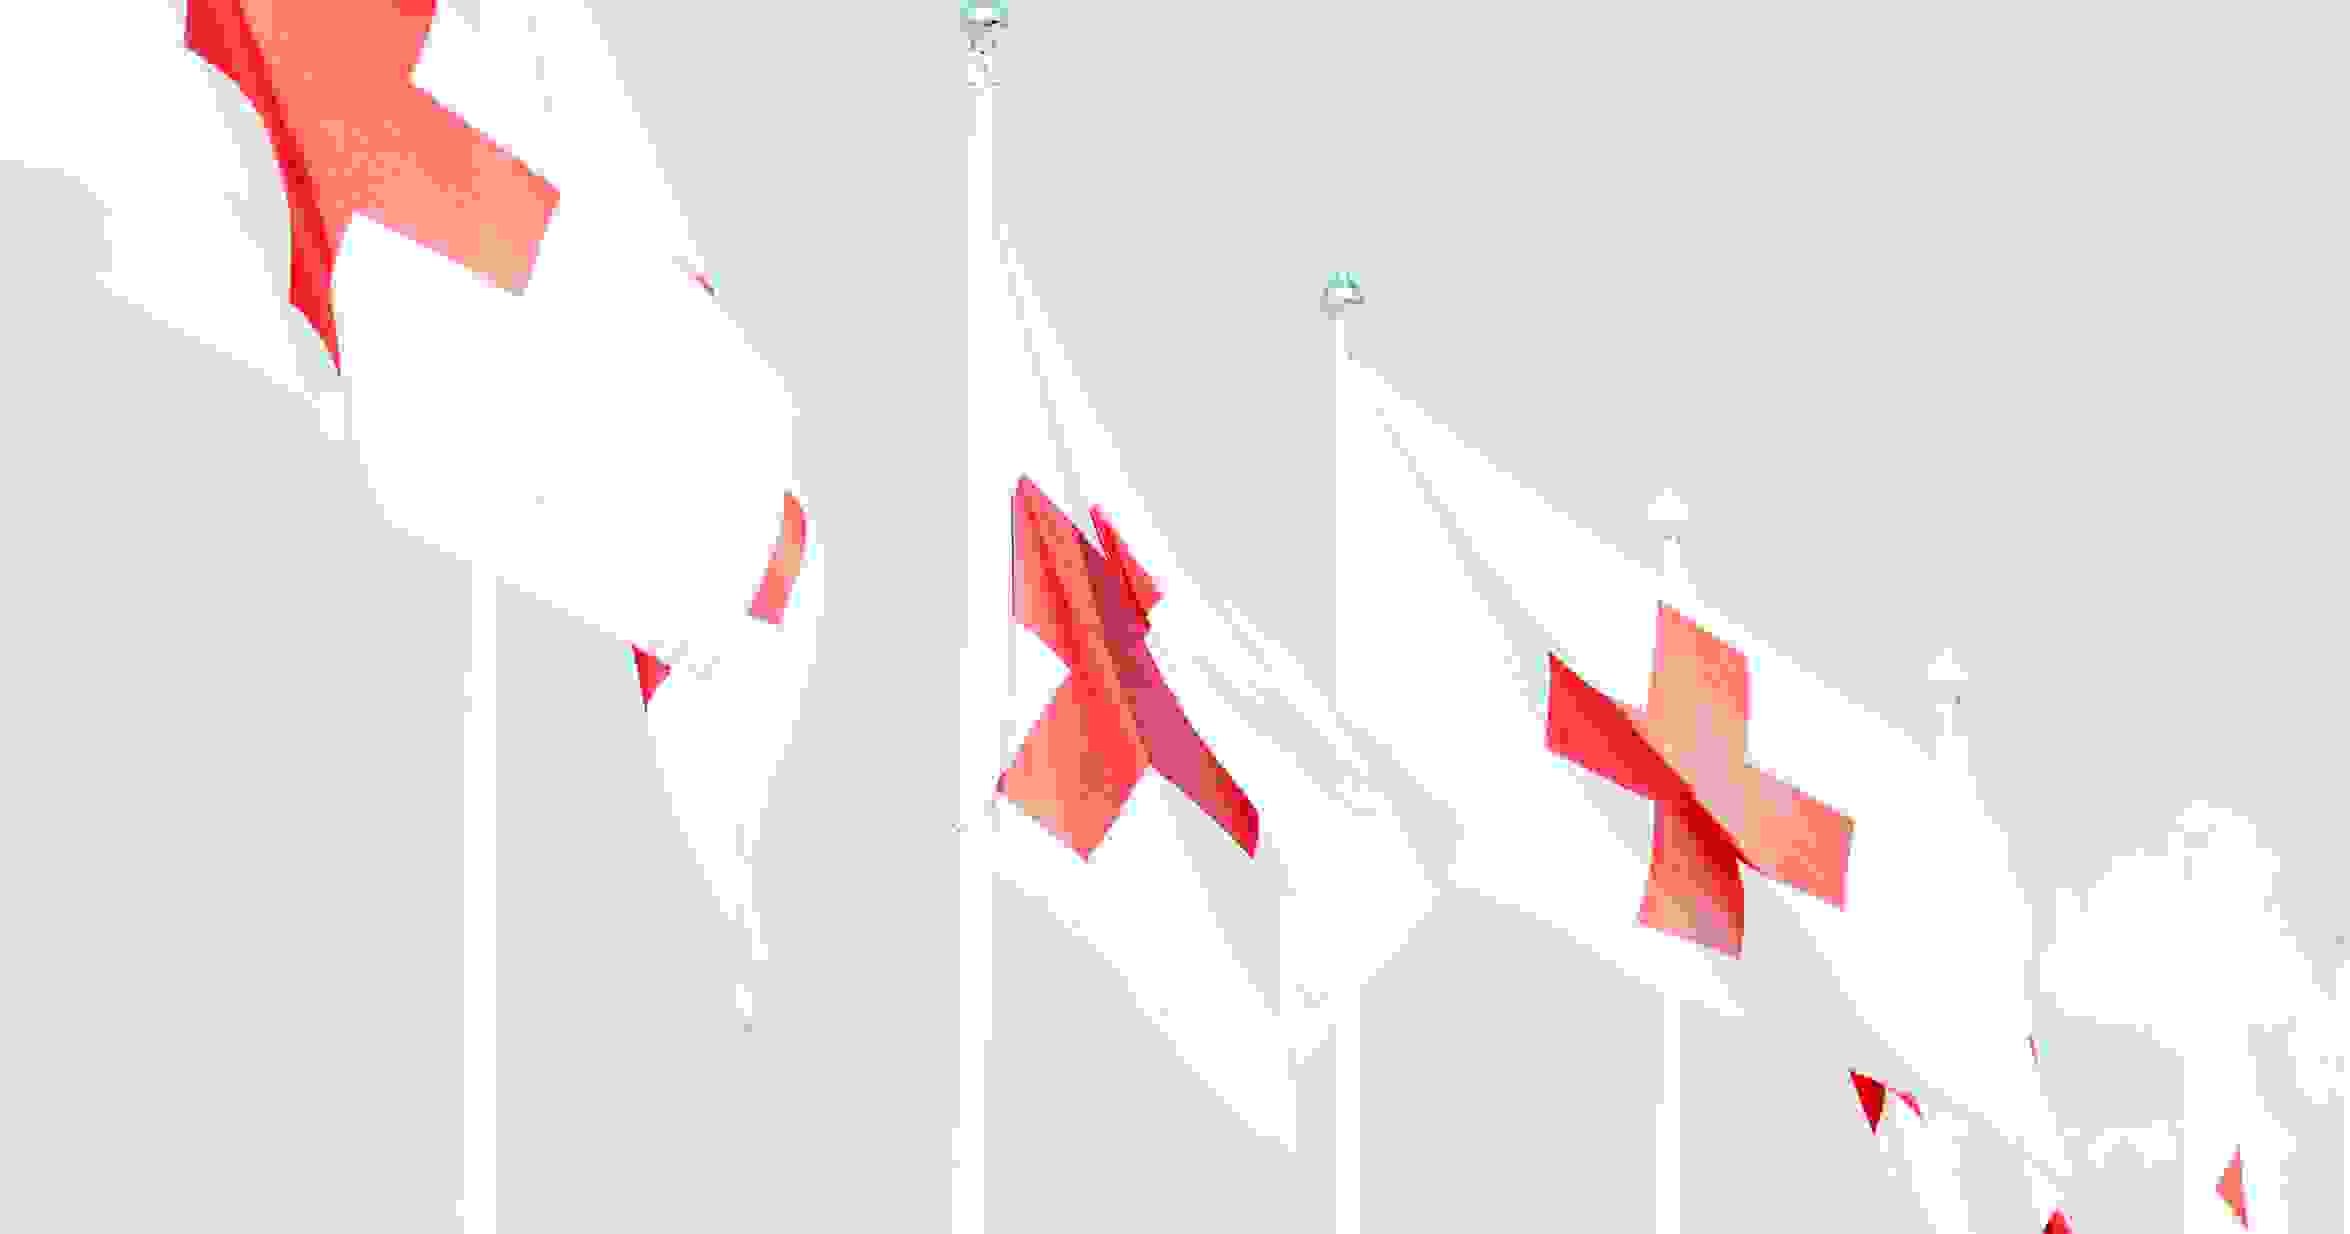 Kuusi Punaisen Ristin lippua lipputangoissa.